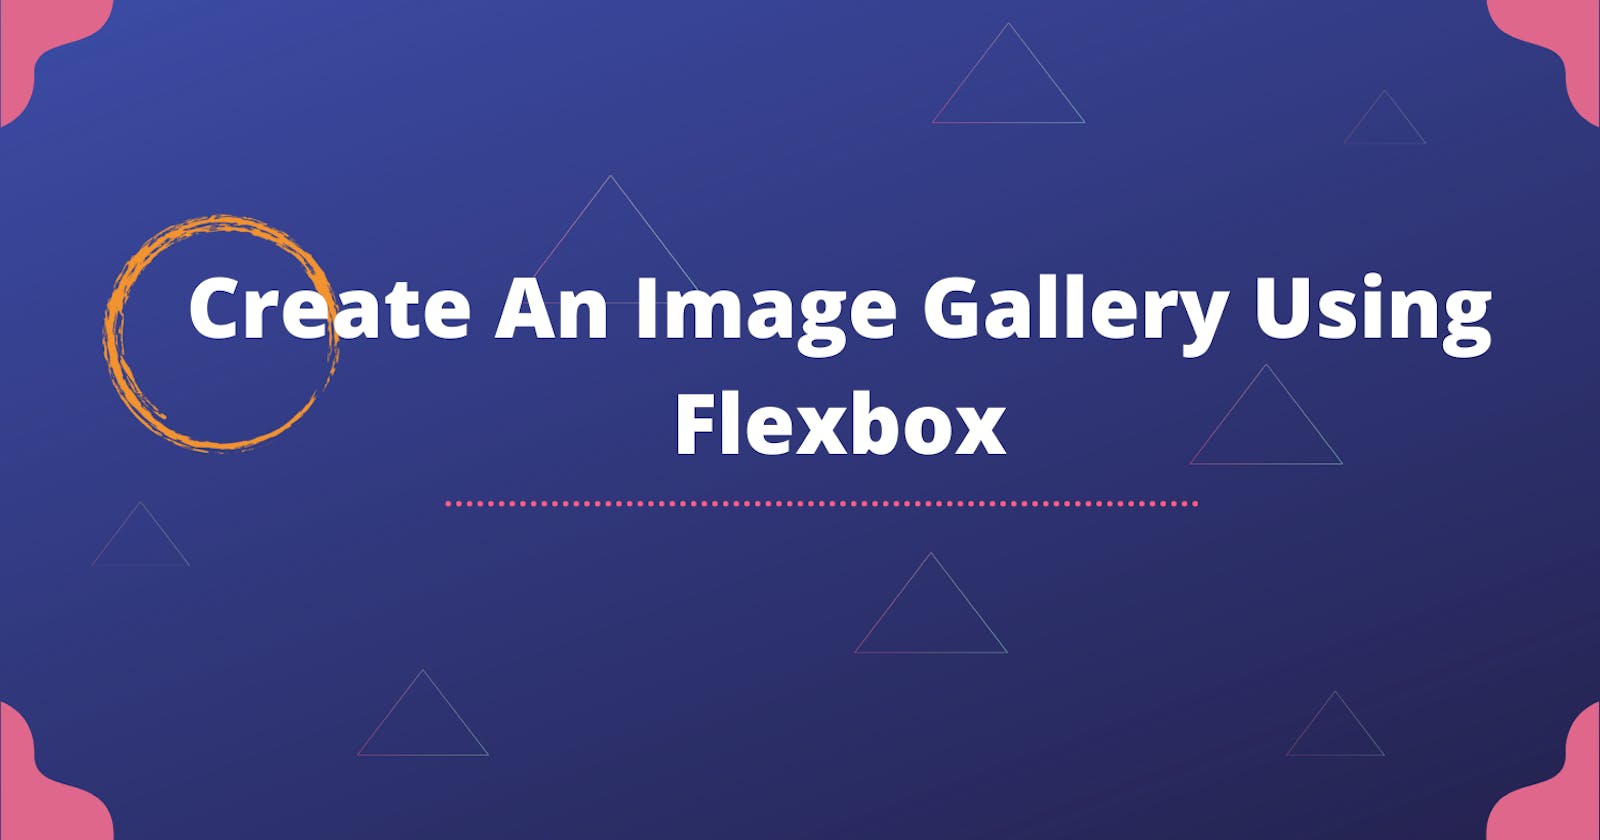 Create An Image Gallery Using Flexbox